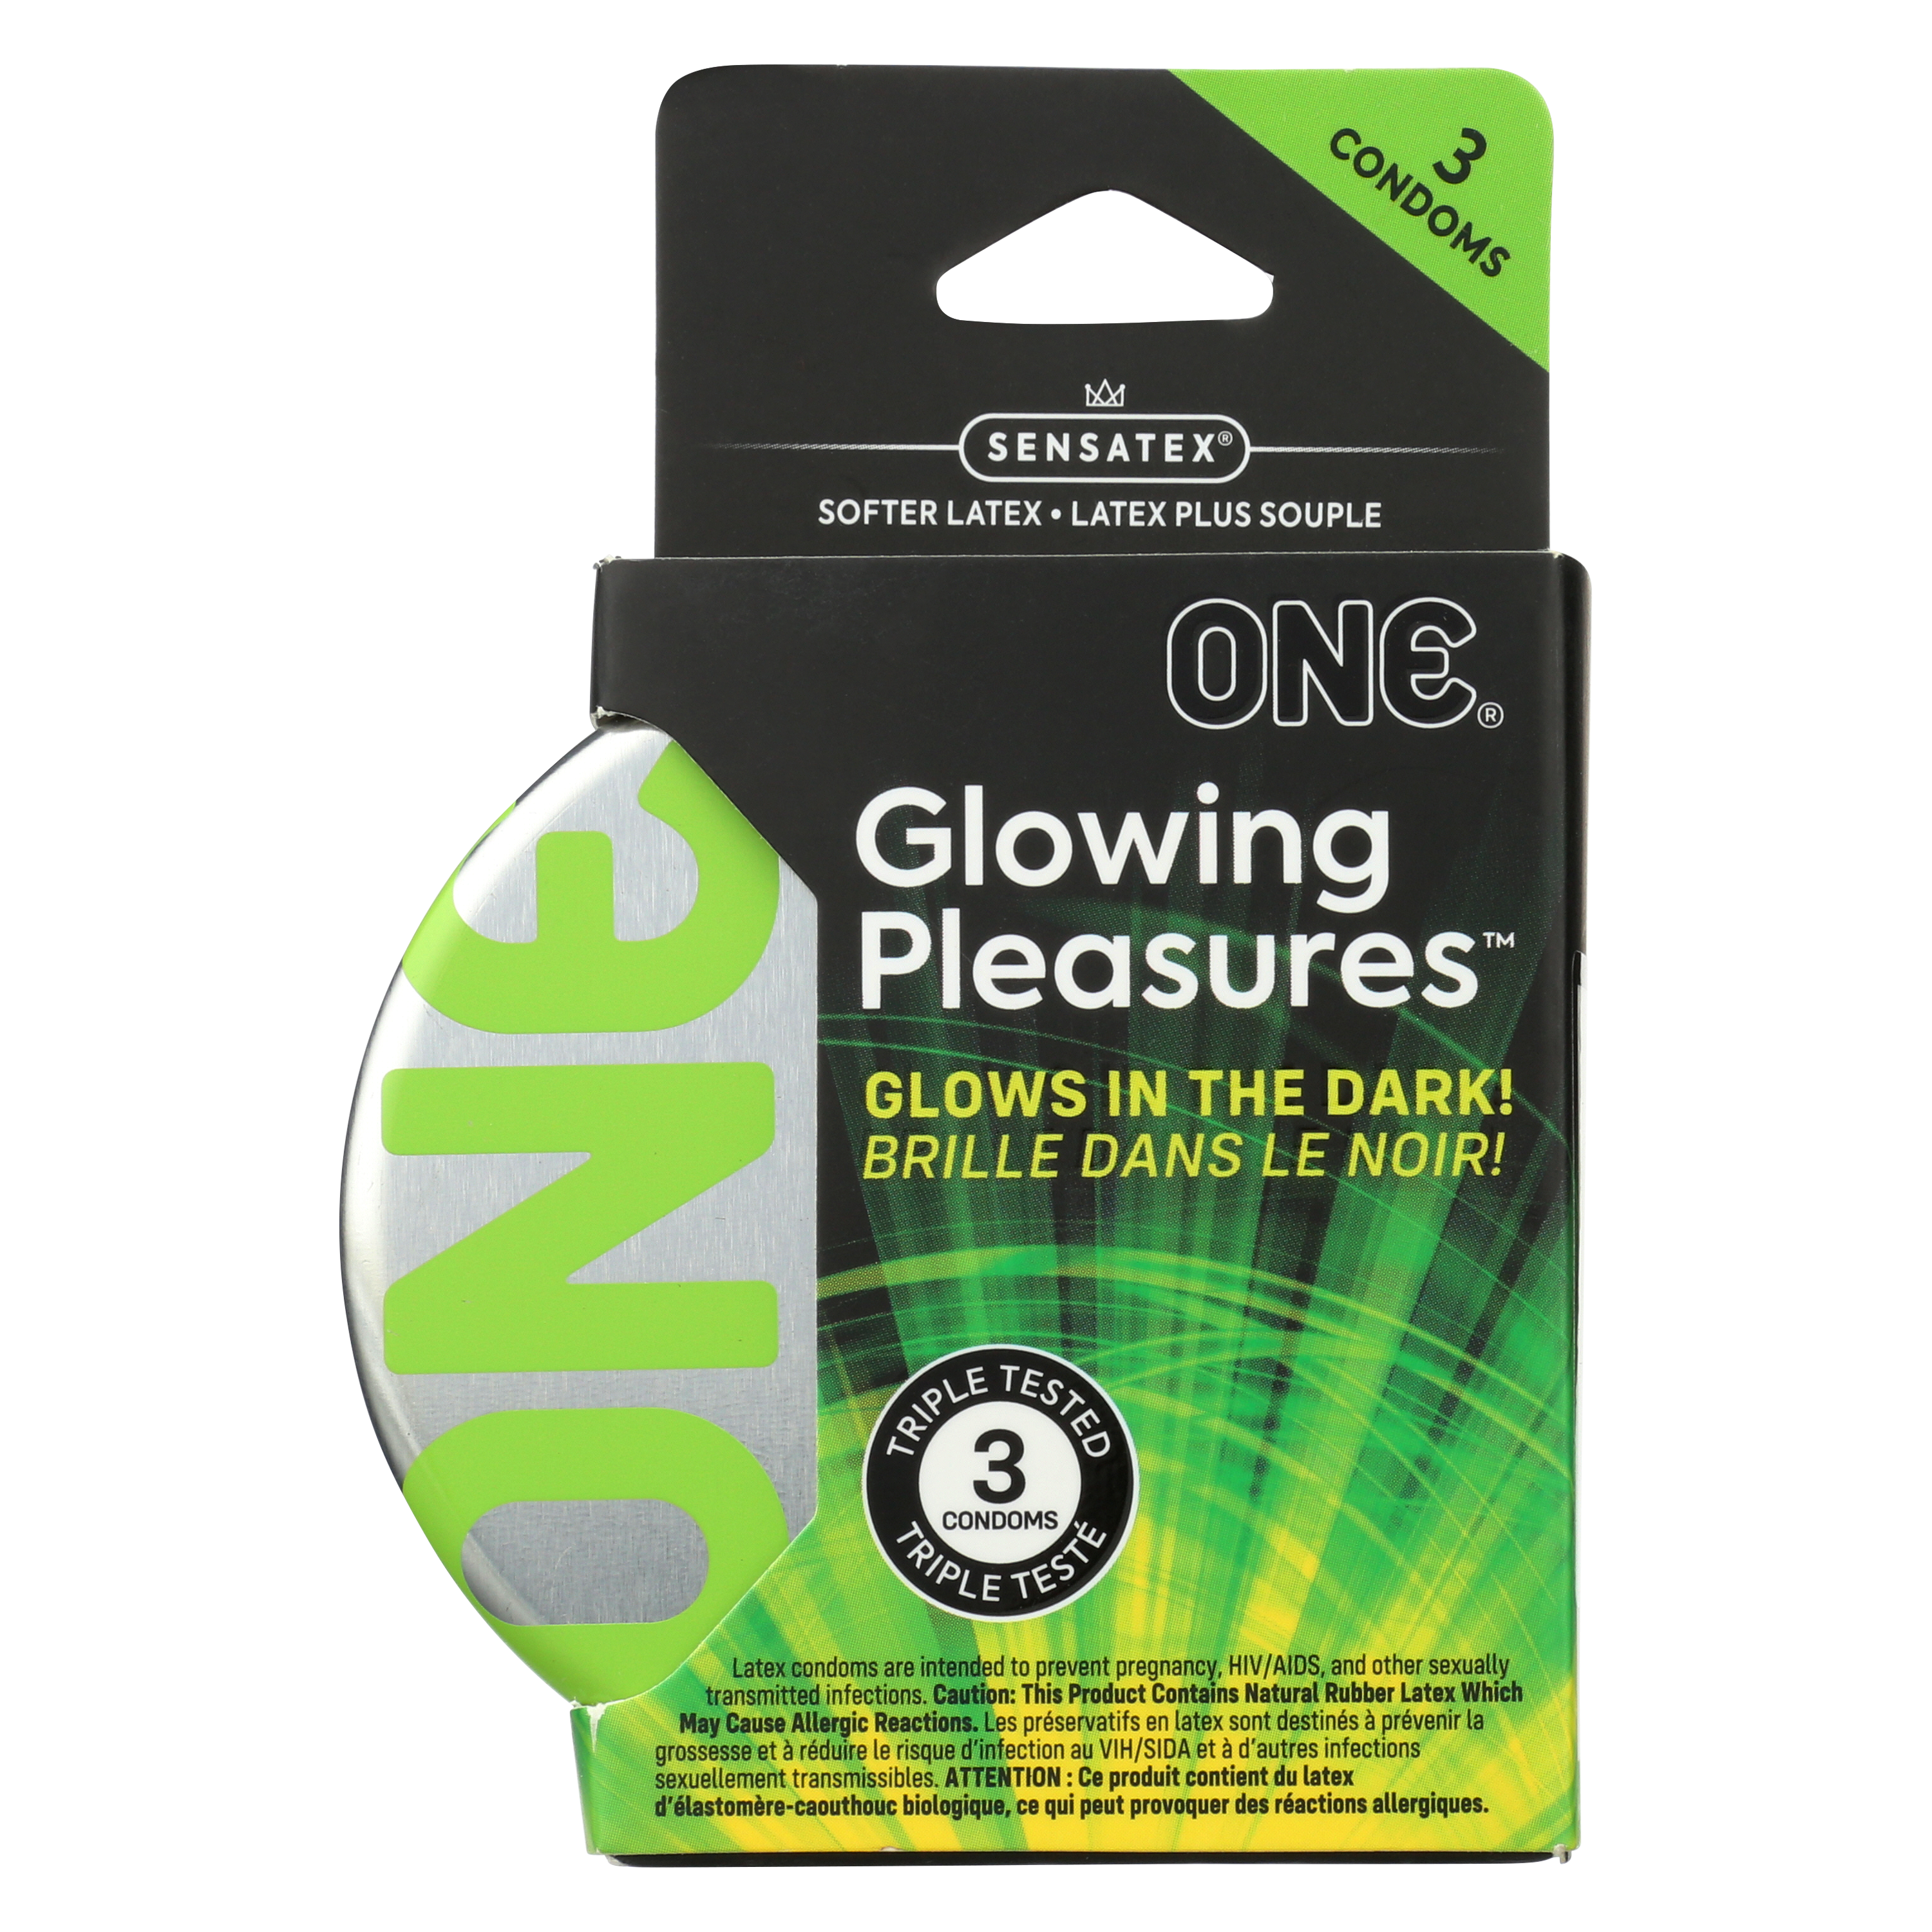 Glowing Pleasures Condoms 3 pks, Case of 144 (24 Bundles of 6)